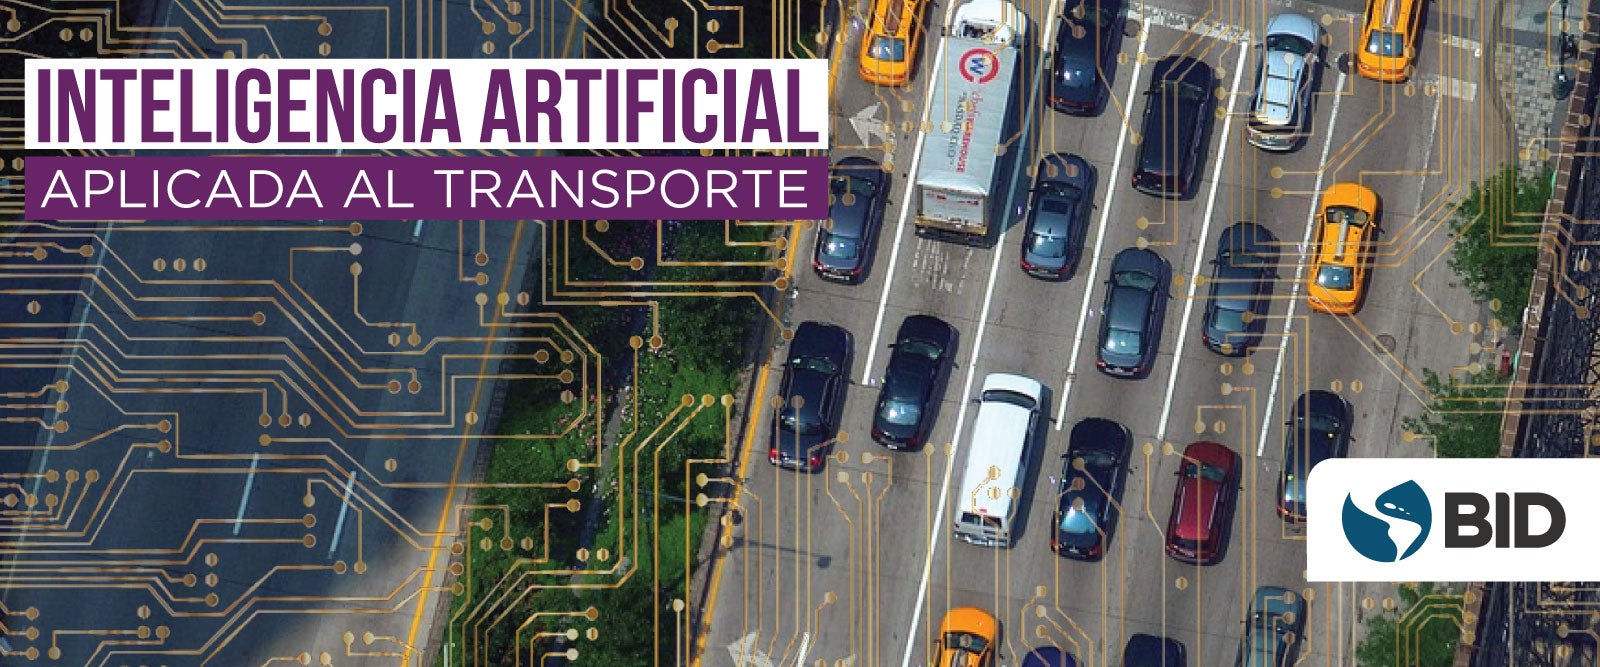  Inteligencia Artificial aplicada al transporte course image